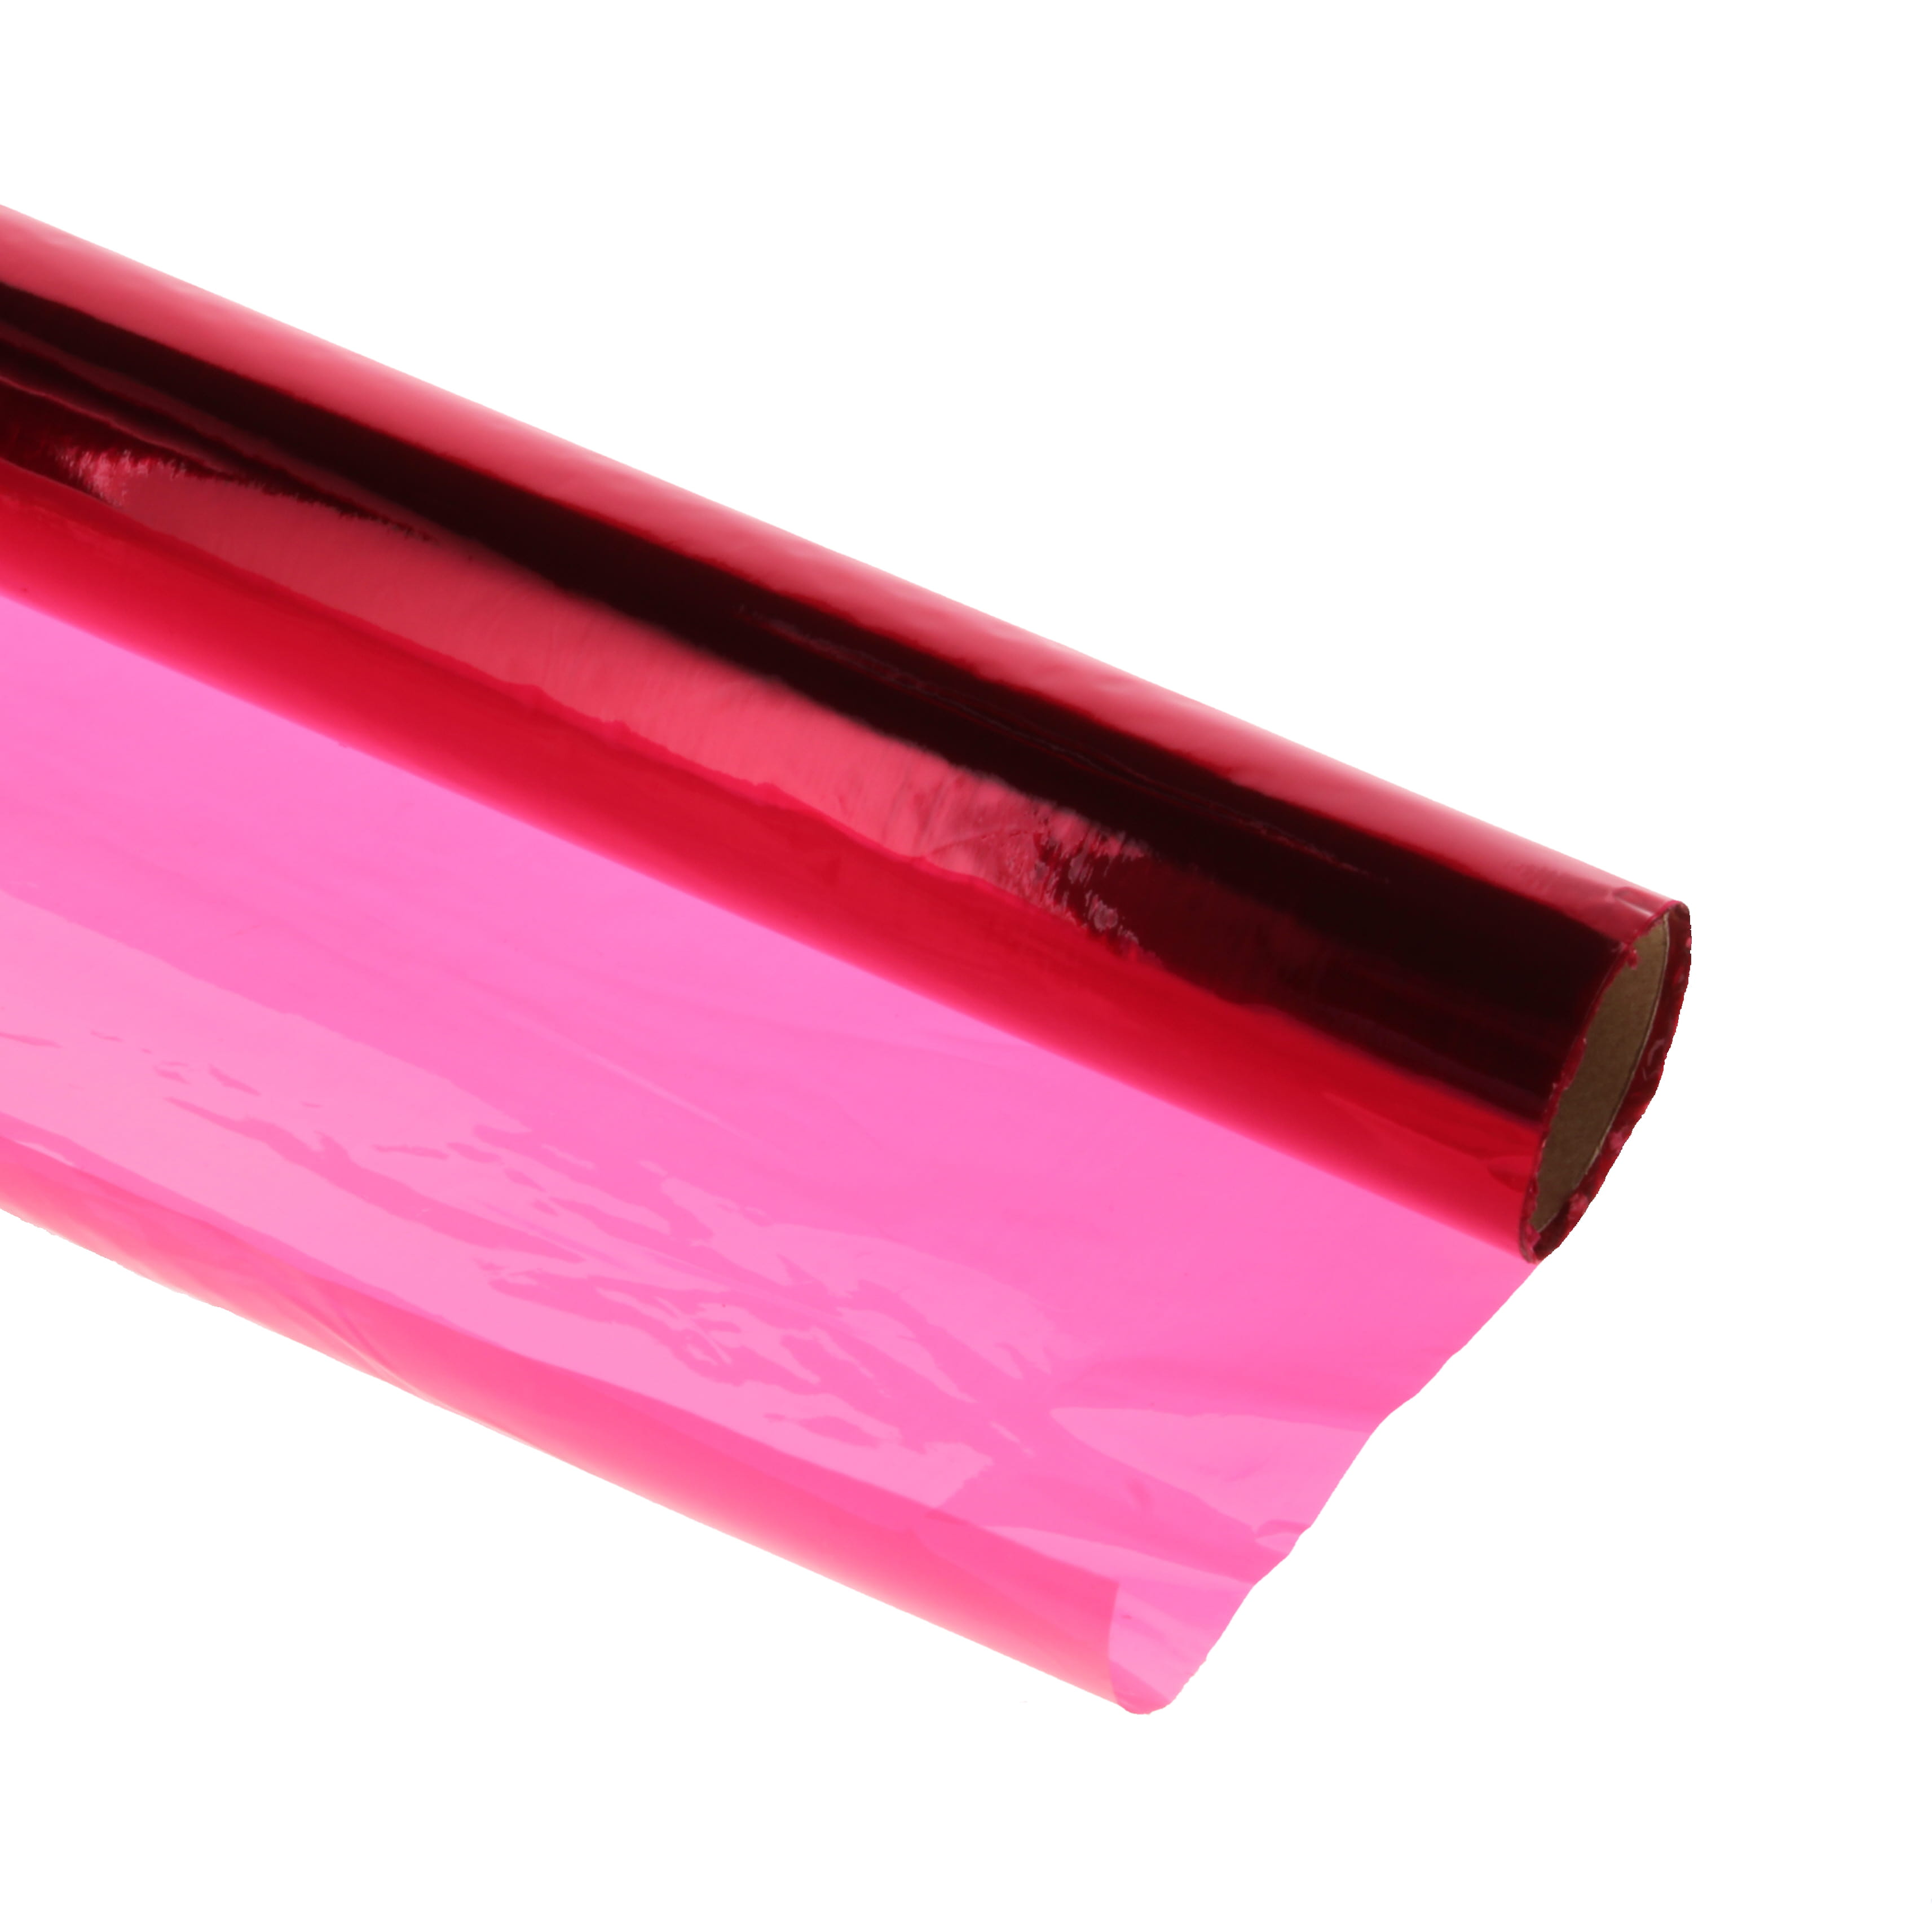 Cellophane Roll Pink - 508mm x 4.5m - STF92PK